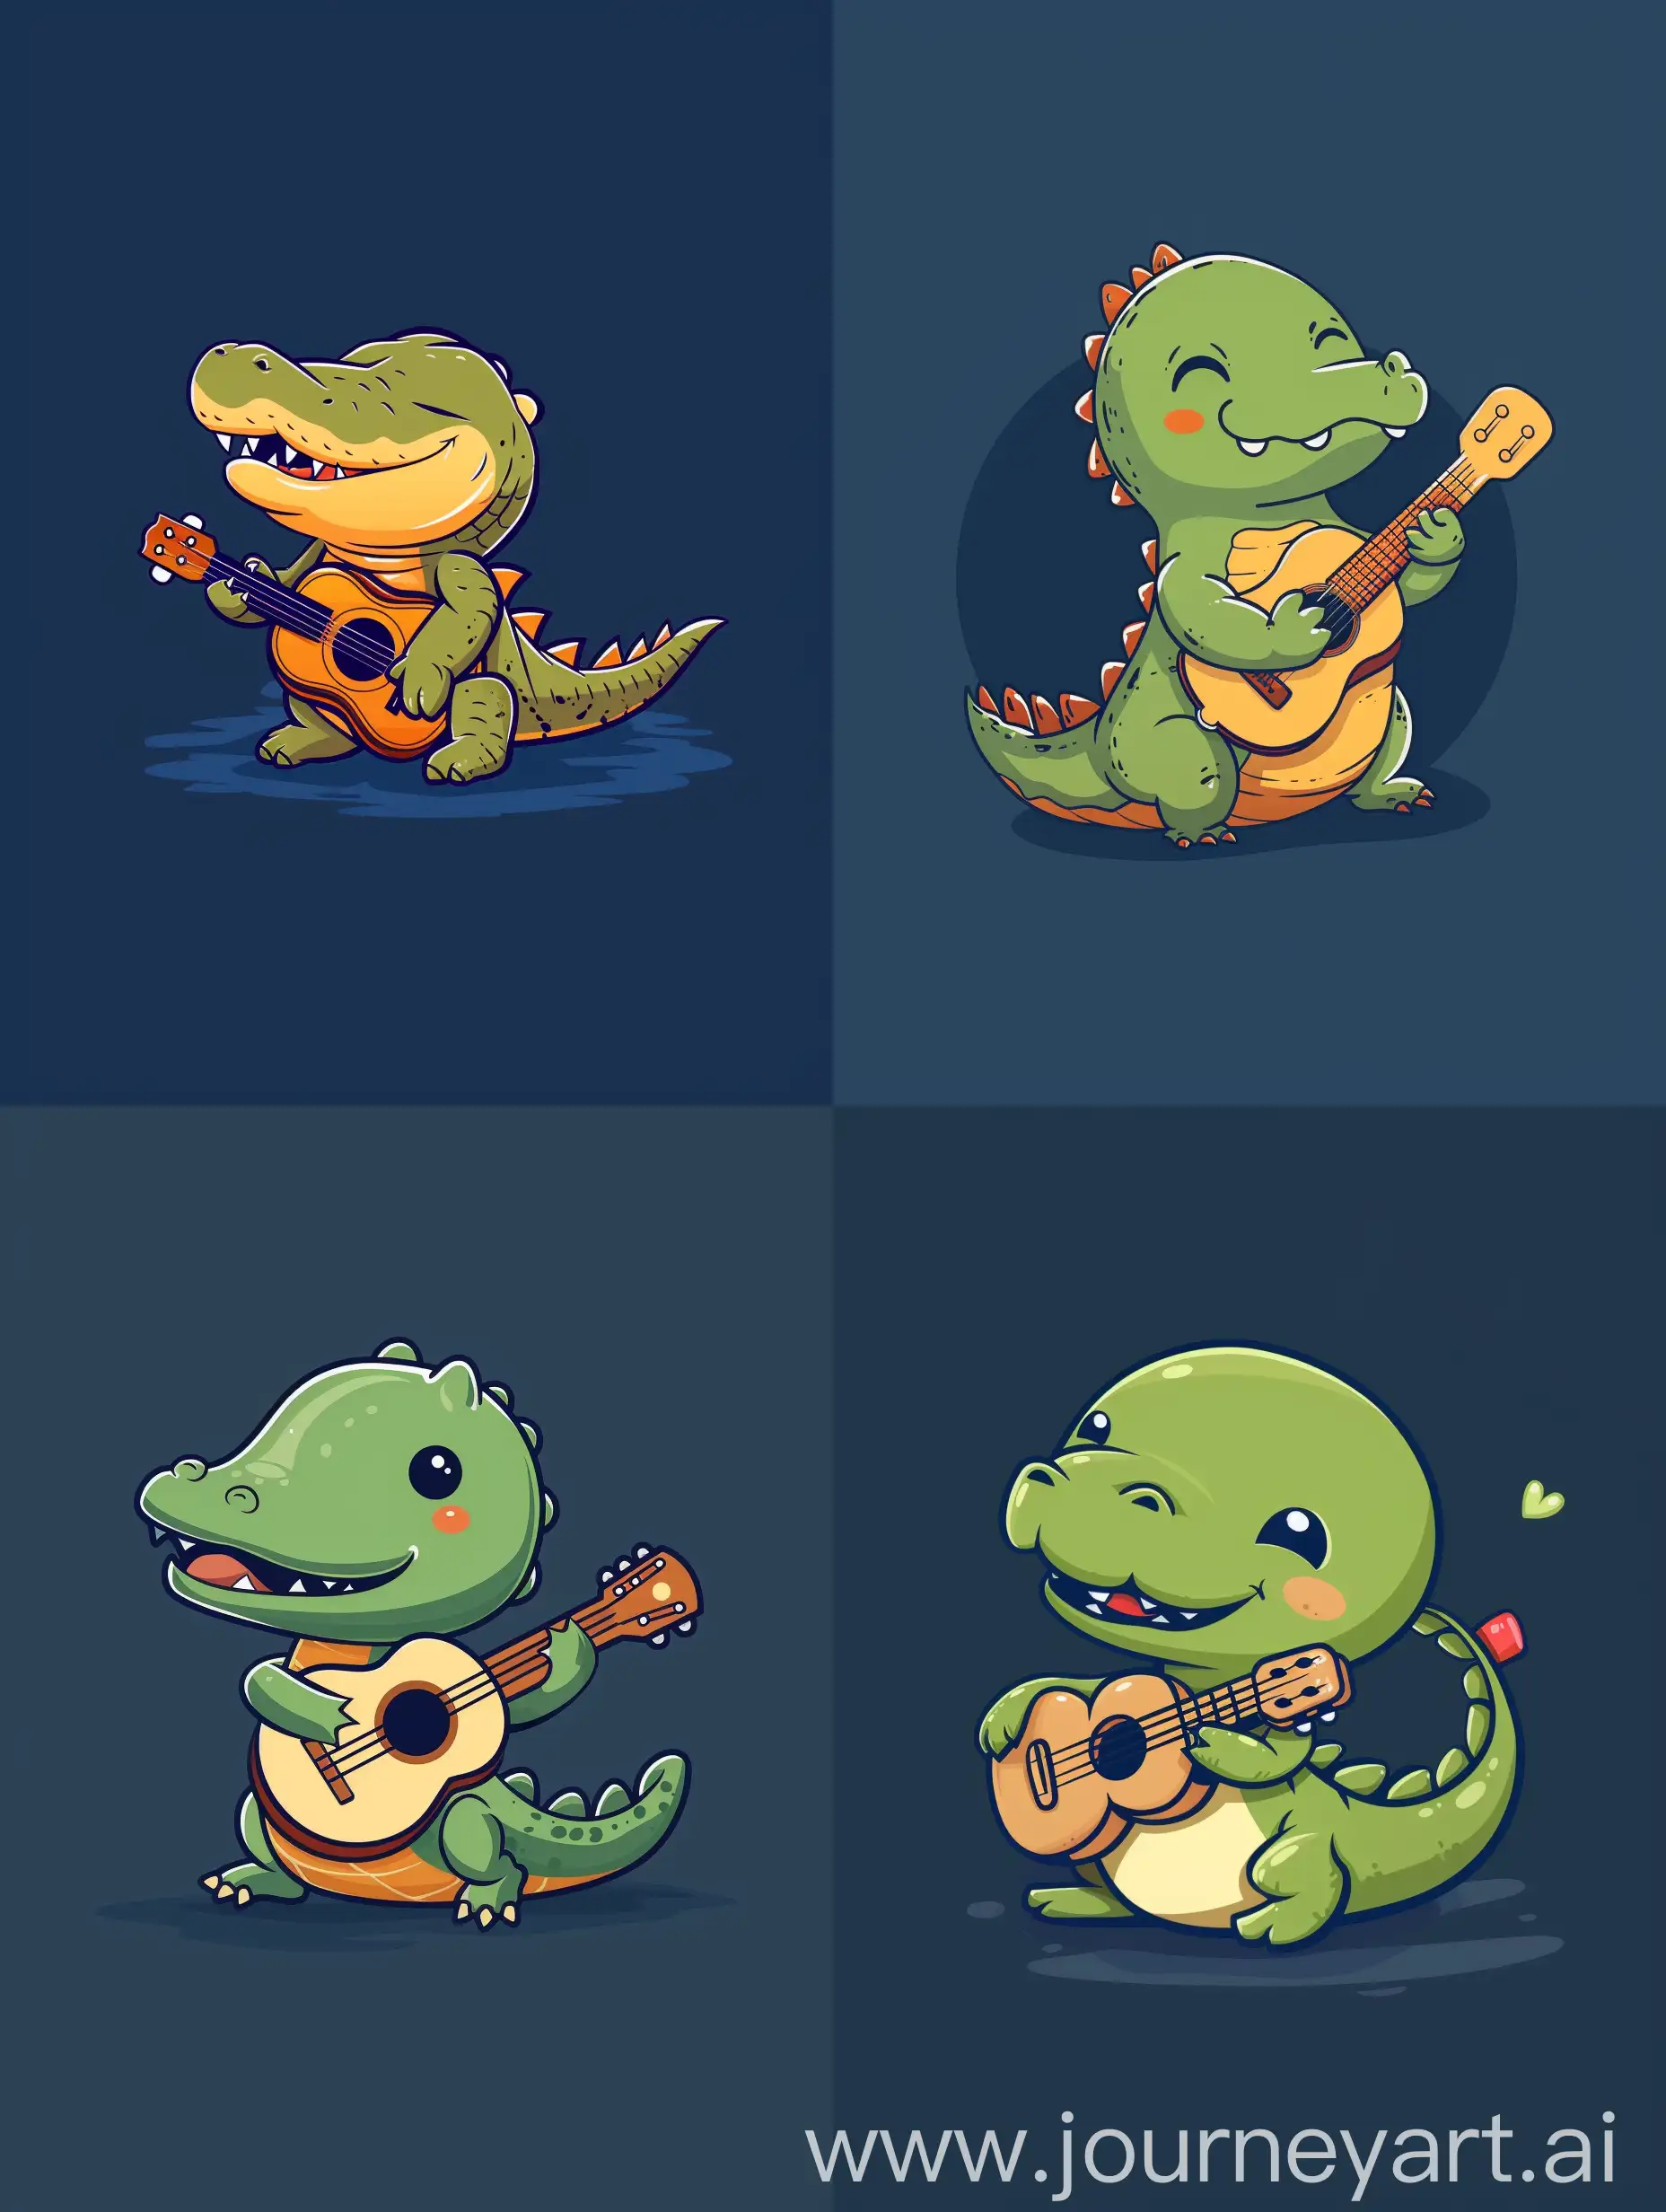 Adorable-Chibi-Crocodile-Playing-Guitar-Against-Dark-Blue-Background